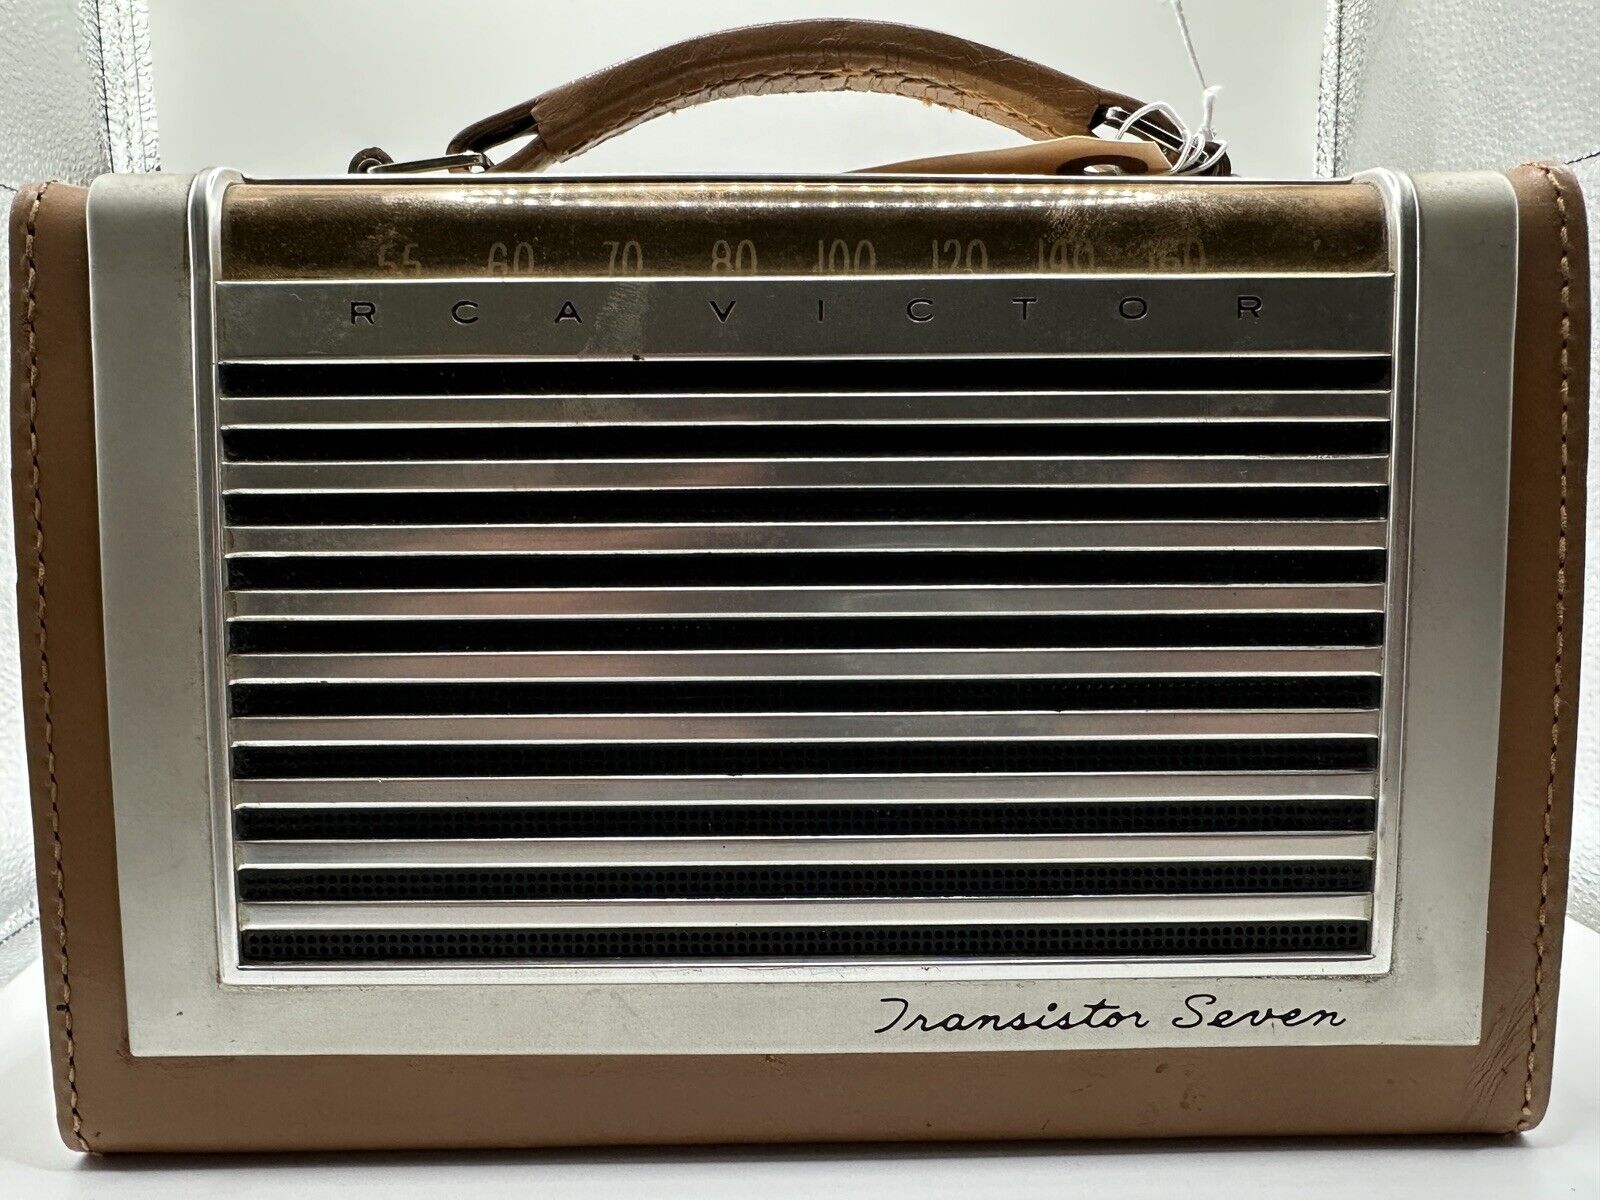 RCA Victor Transistor Seven Radio Leather 1950's Vintage GREAT SHAPE